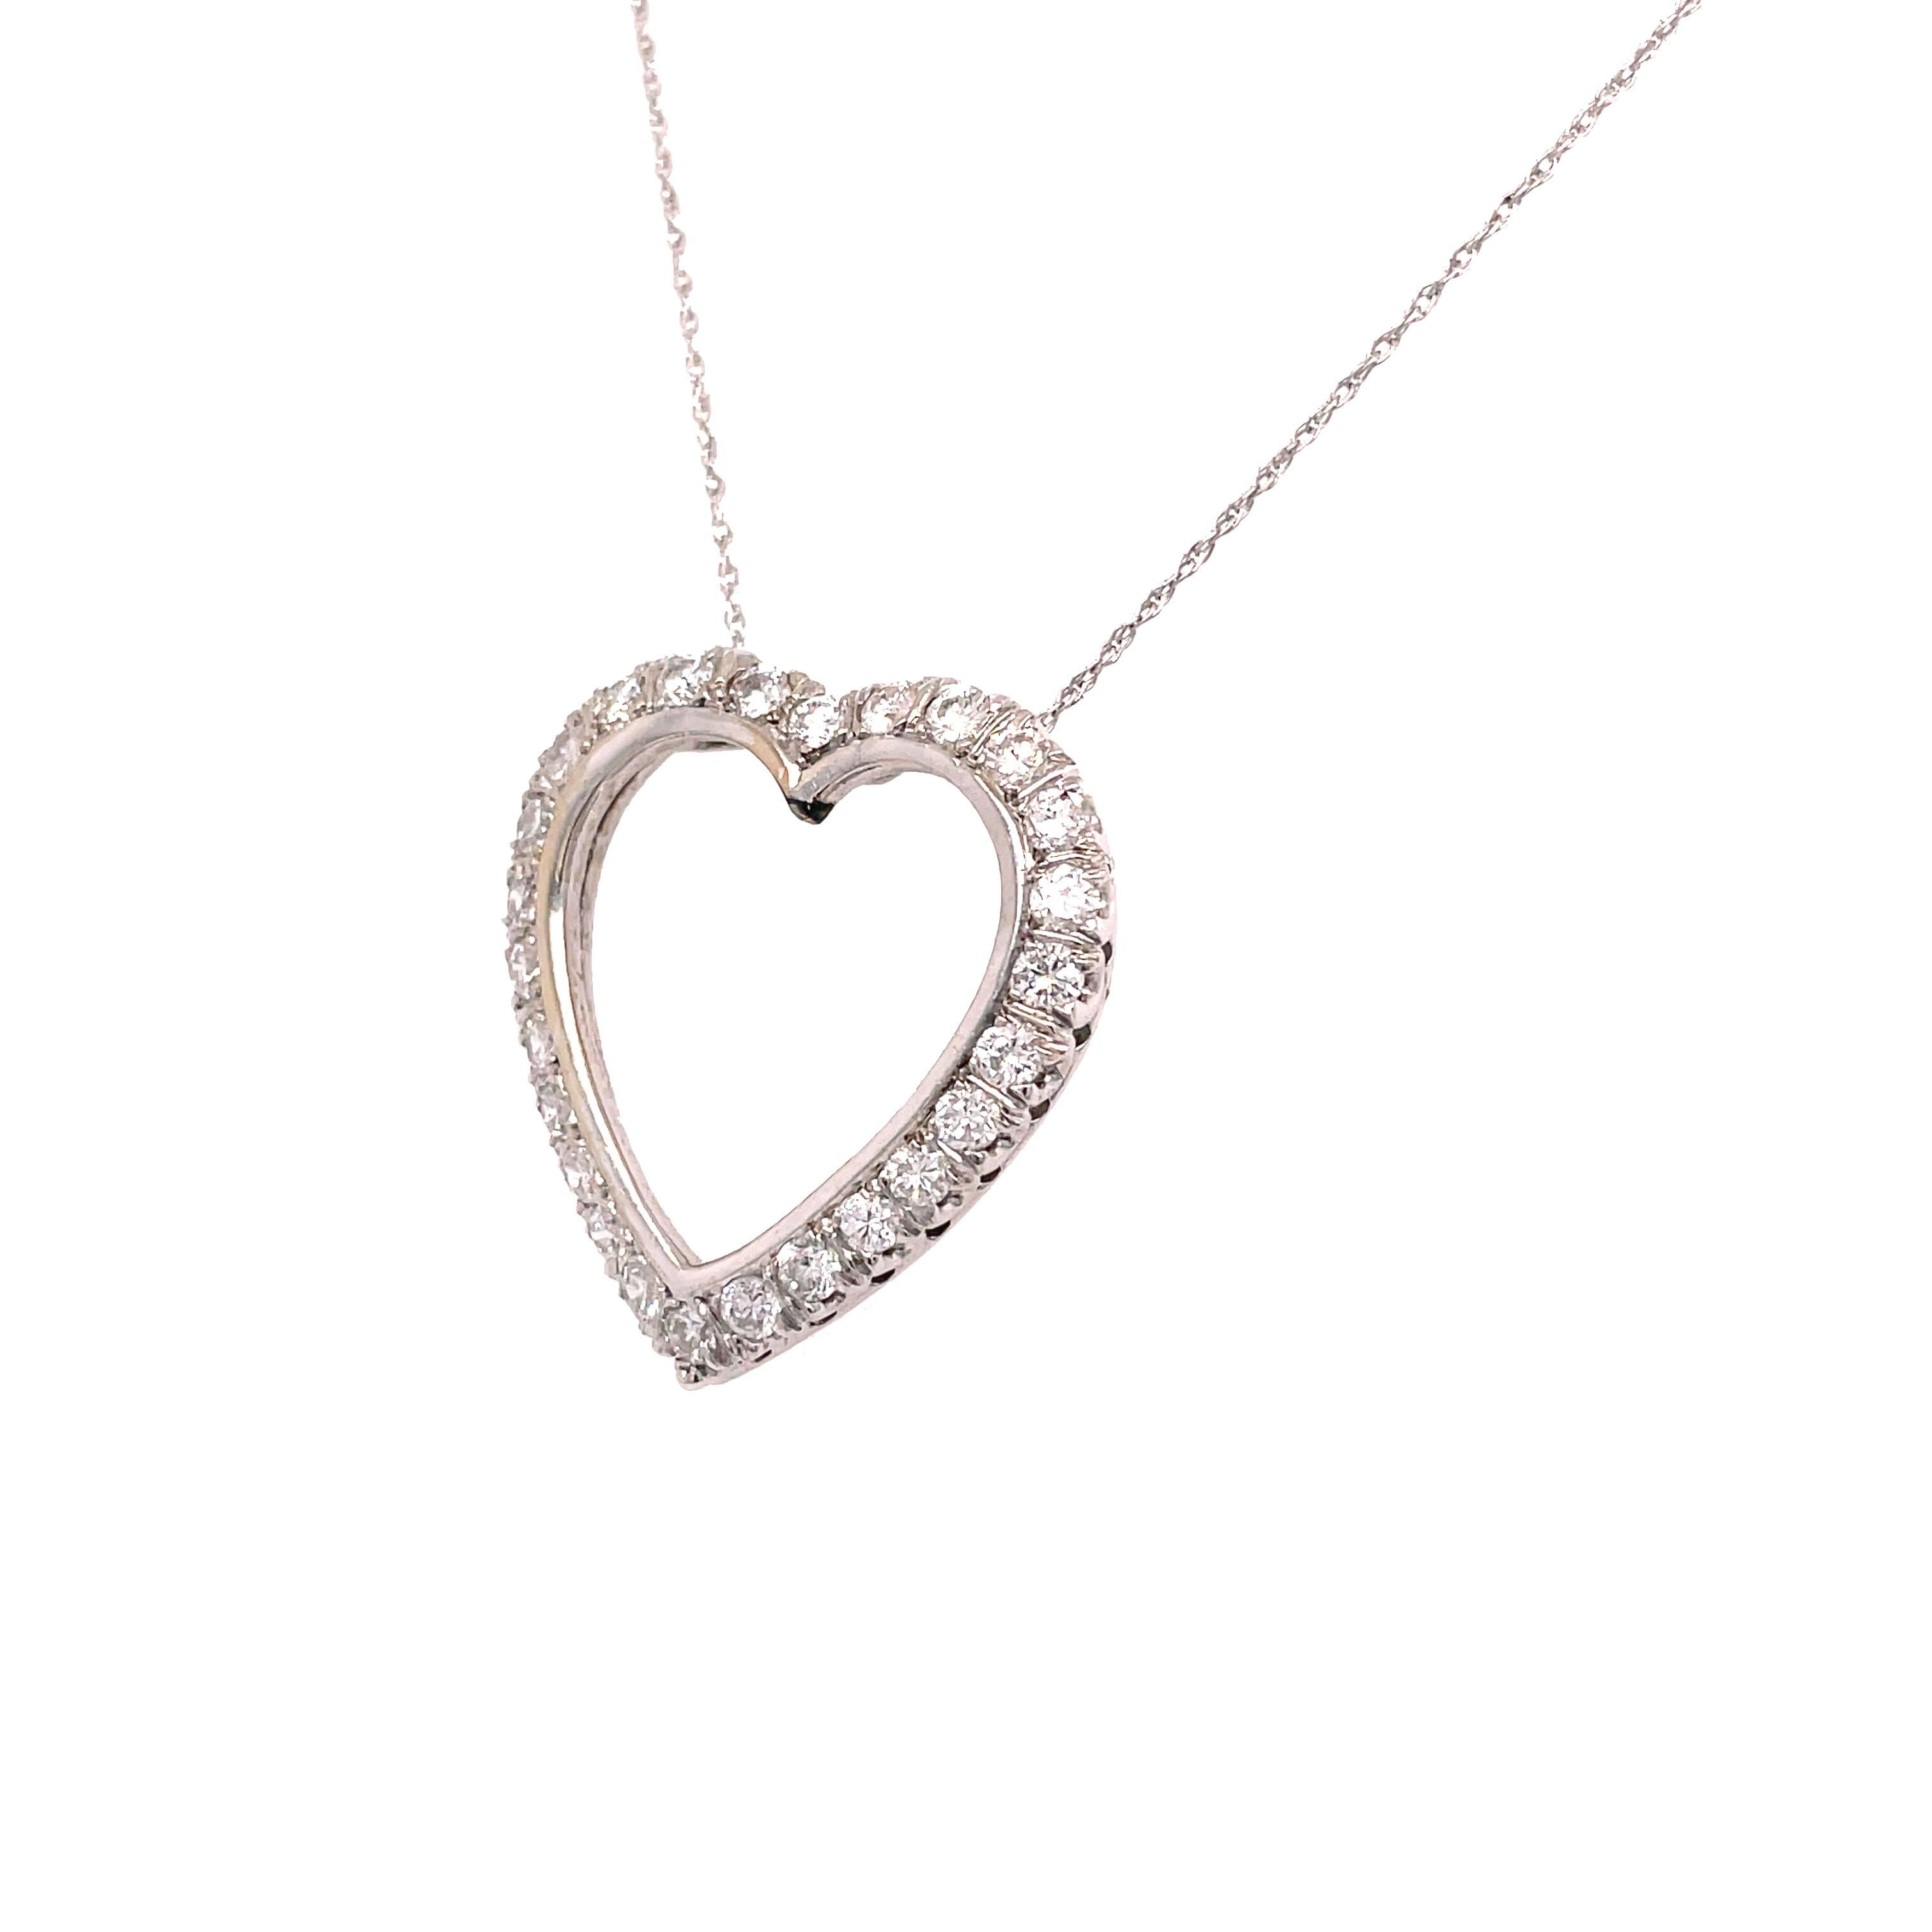 1950s diamond necklace